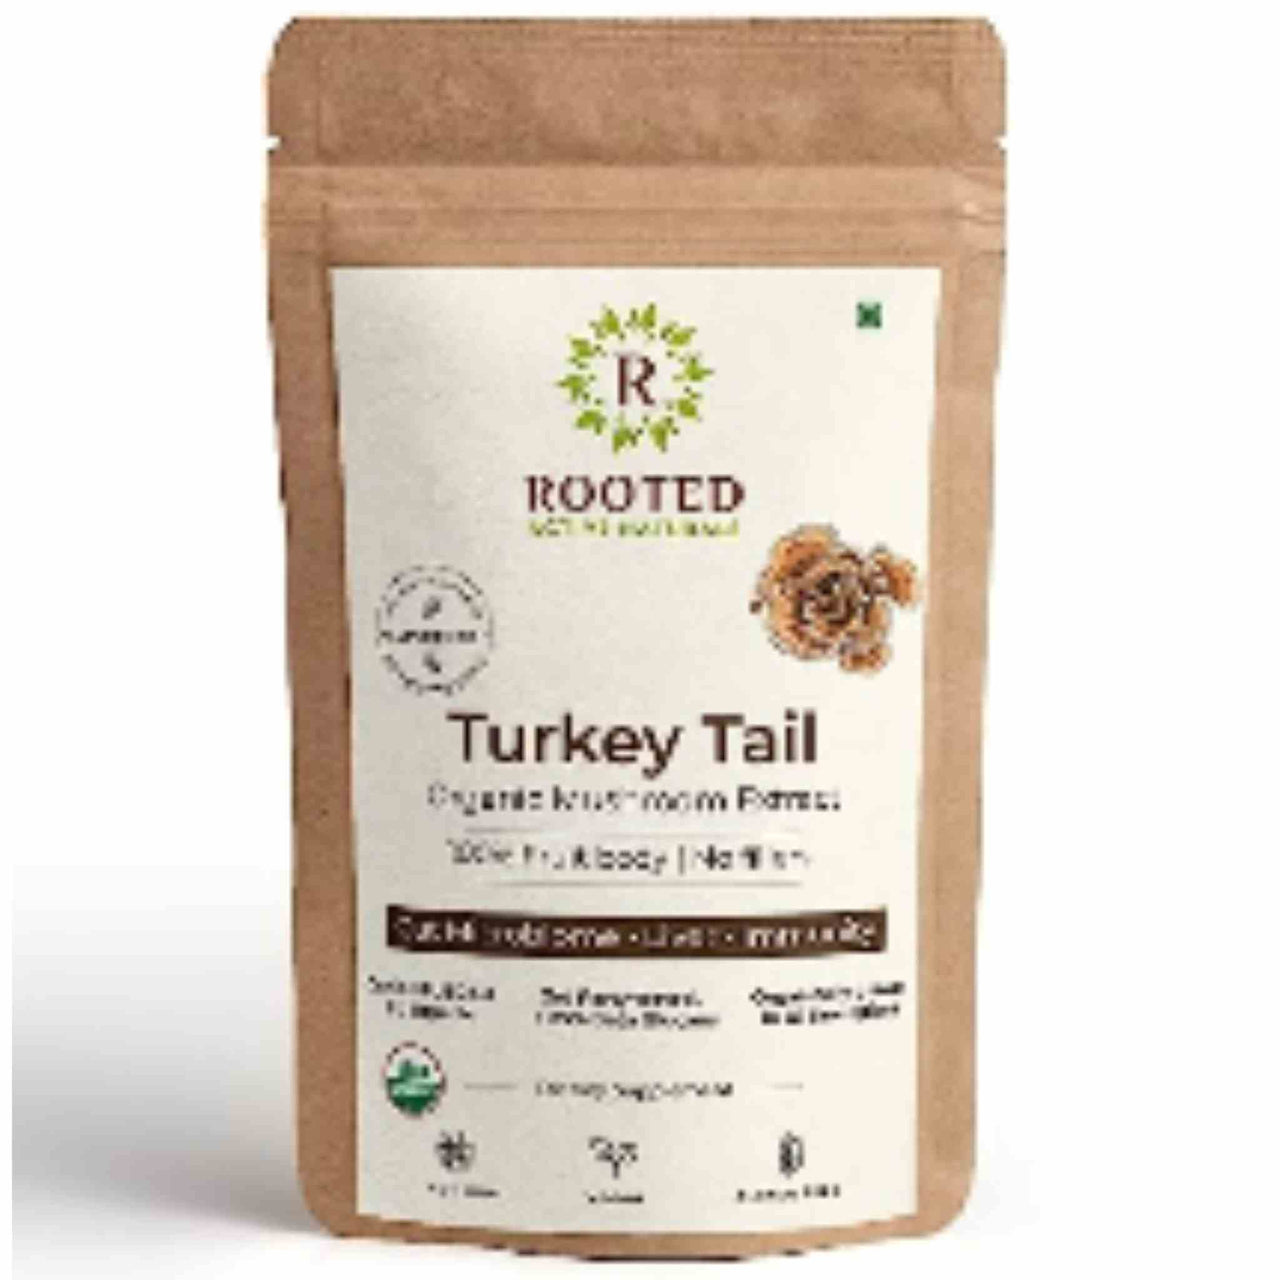 Rooted Actives Turkey Tail mushroom Extract Powder | Gut Health, Liver, Immunity | USDA Organic, 35% Beta Glucans